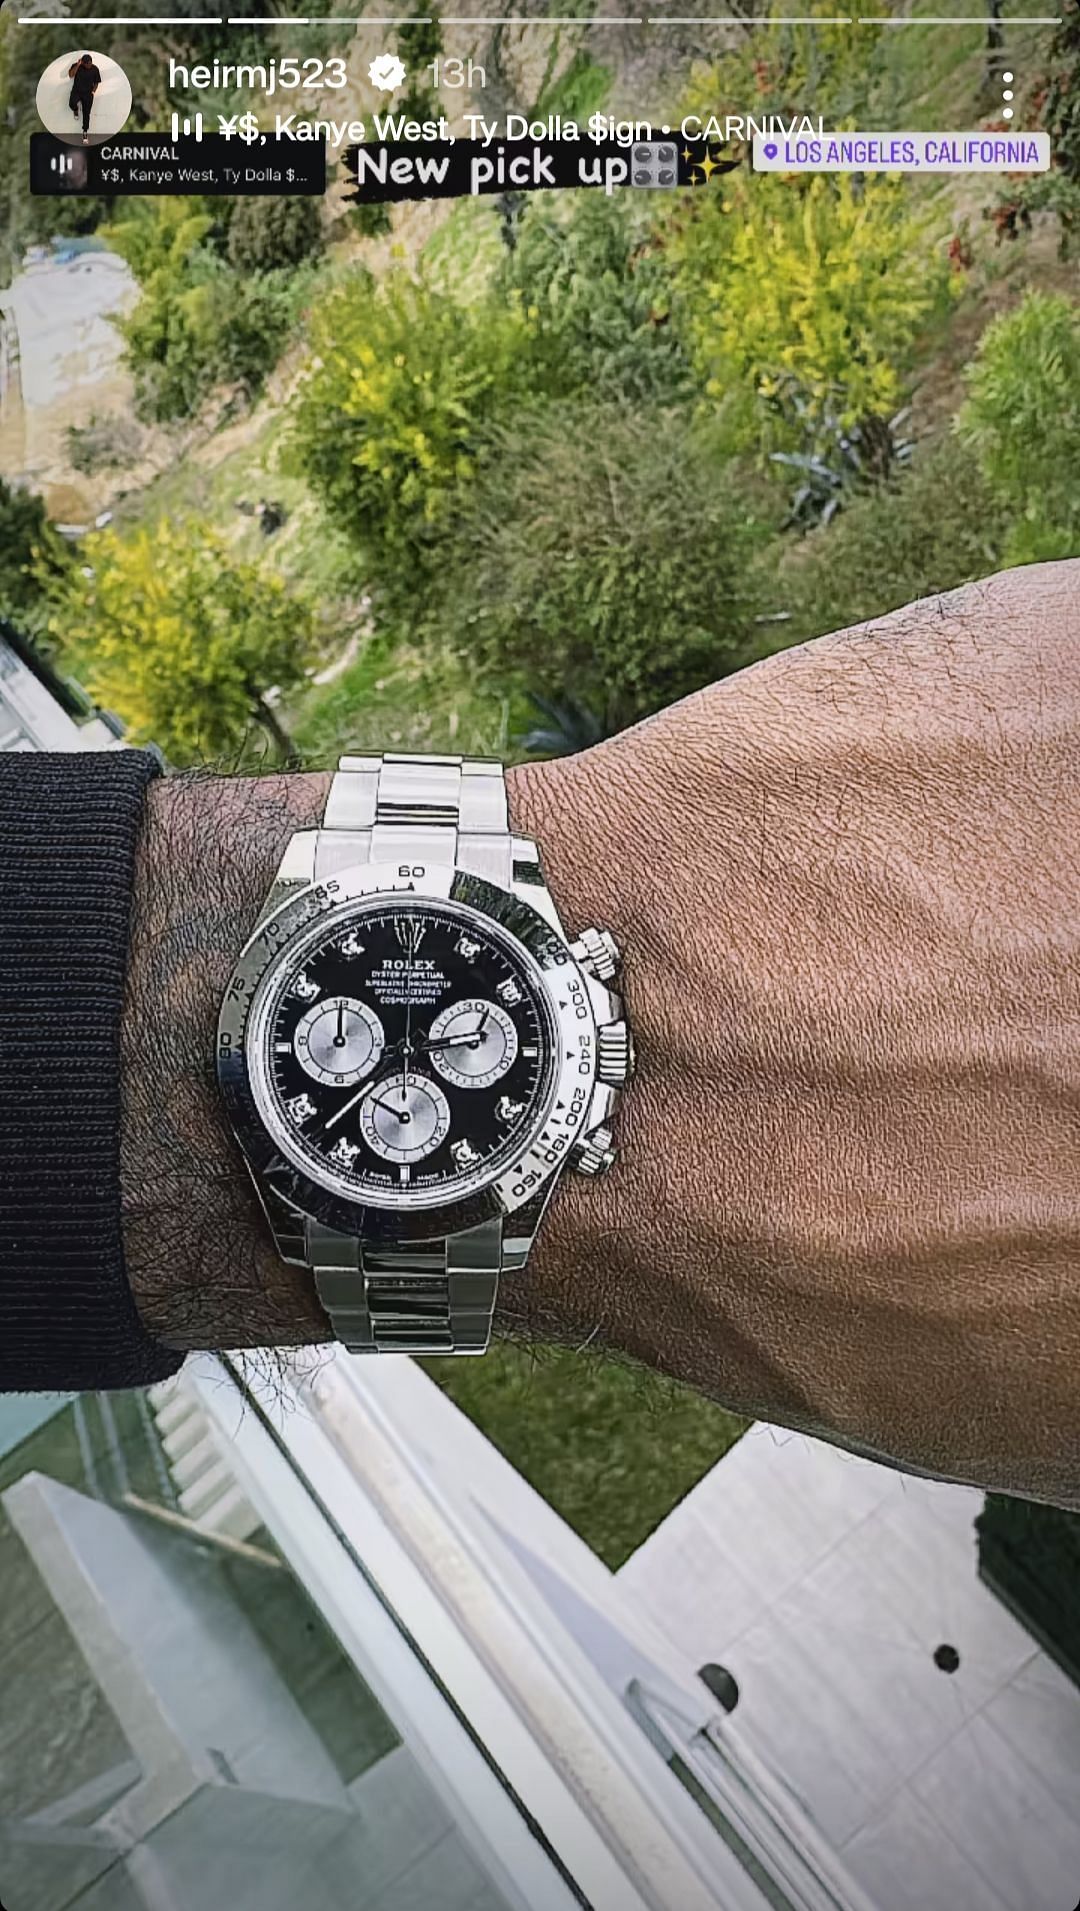 Marcus&rsquo; Instagram snaps of his new $44,000 Rolex Cosmograph Daytona